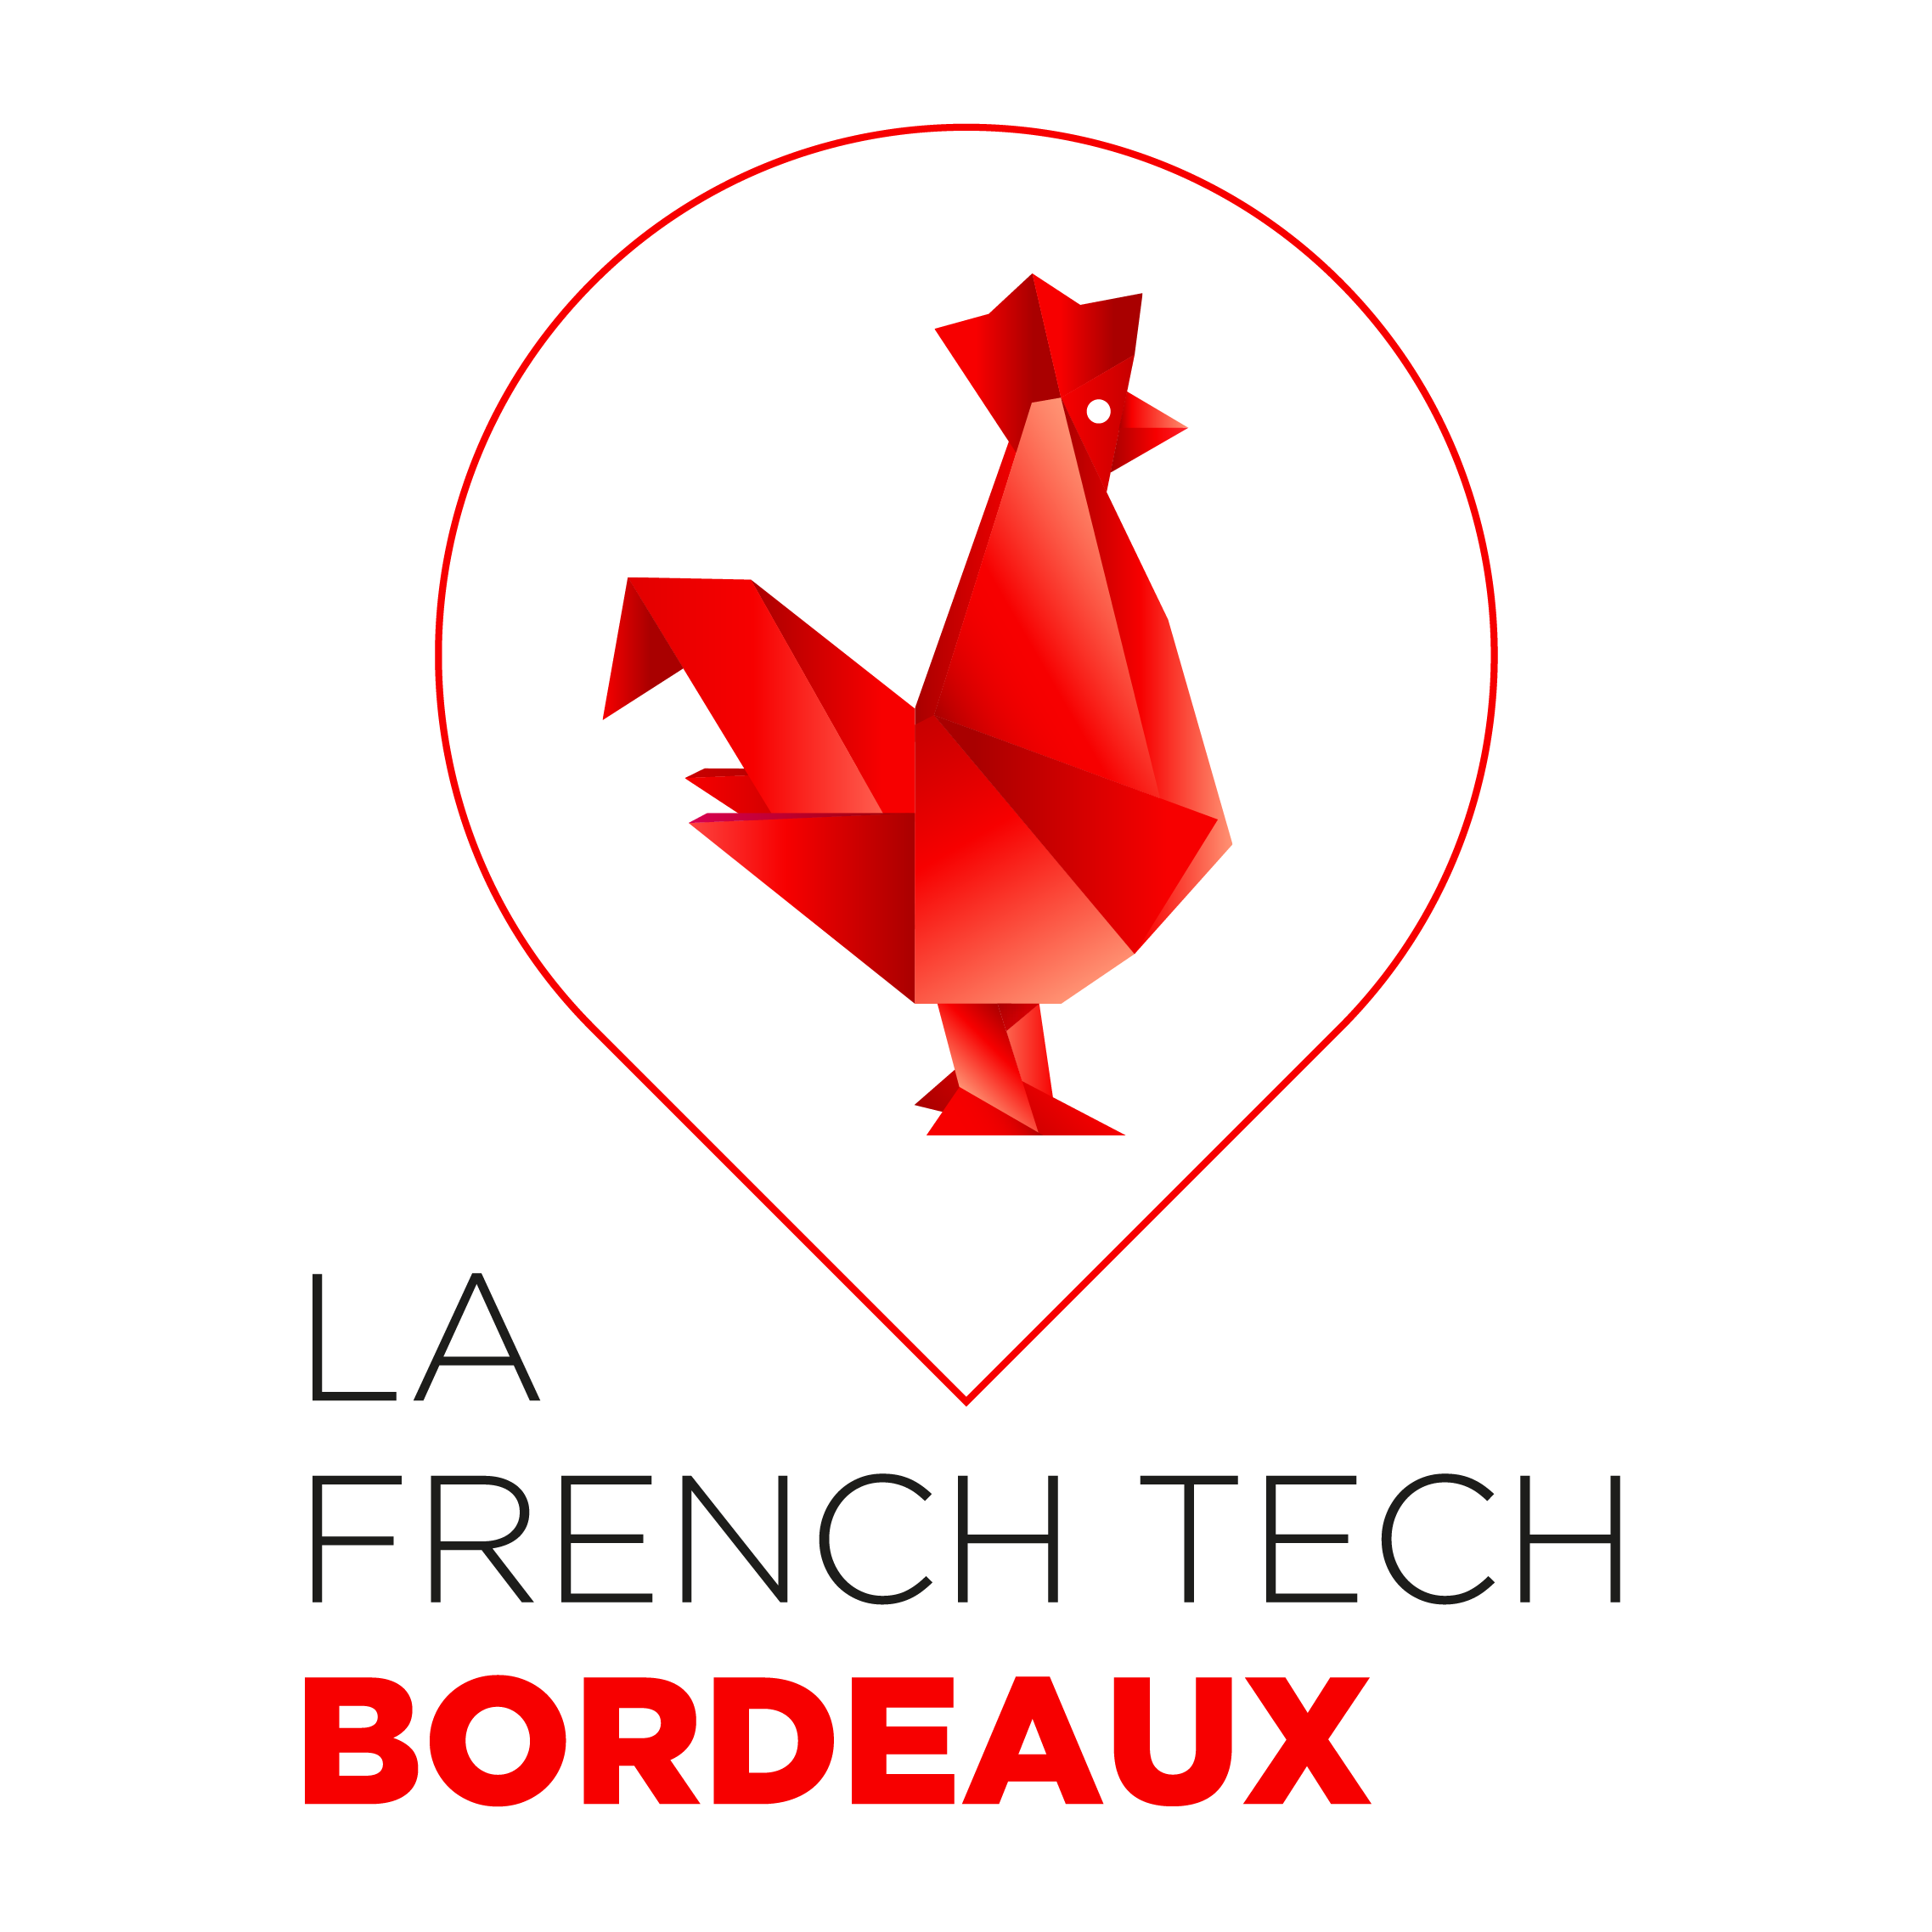 La French Tech Bordeaux